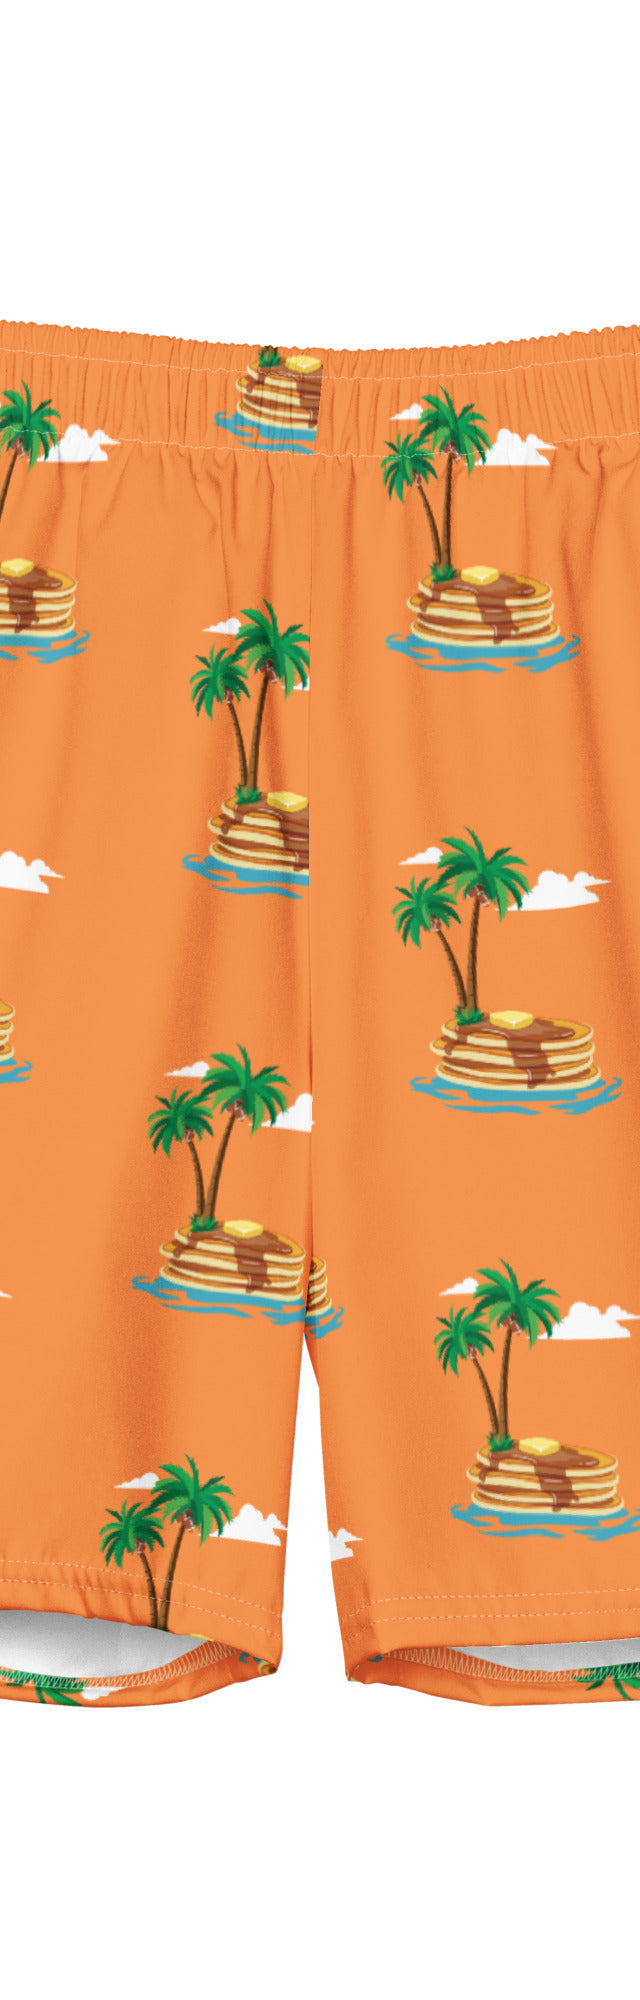 Pancakes and Palm Trees - Orange